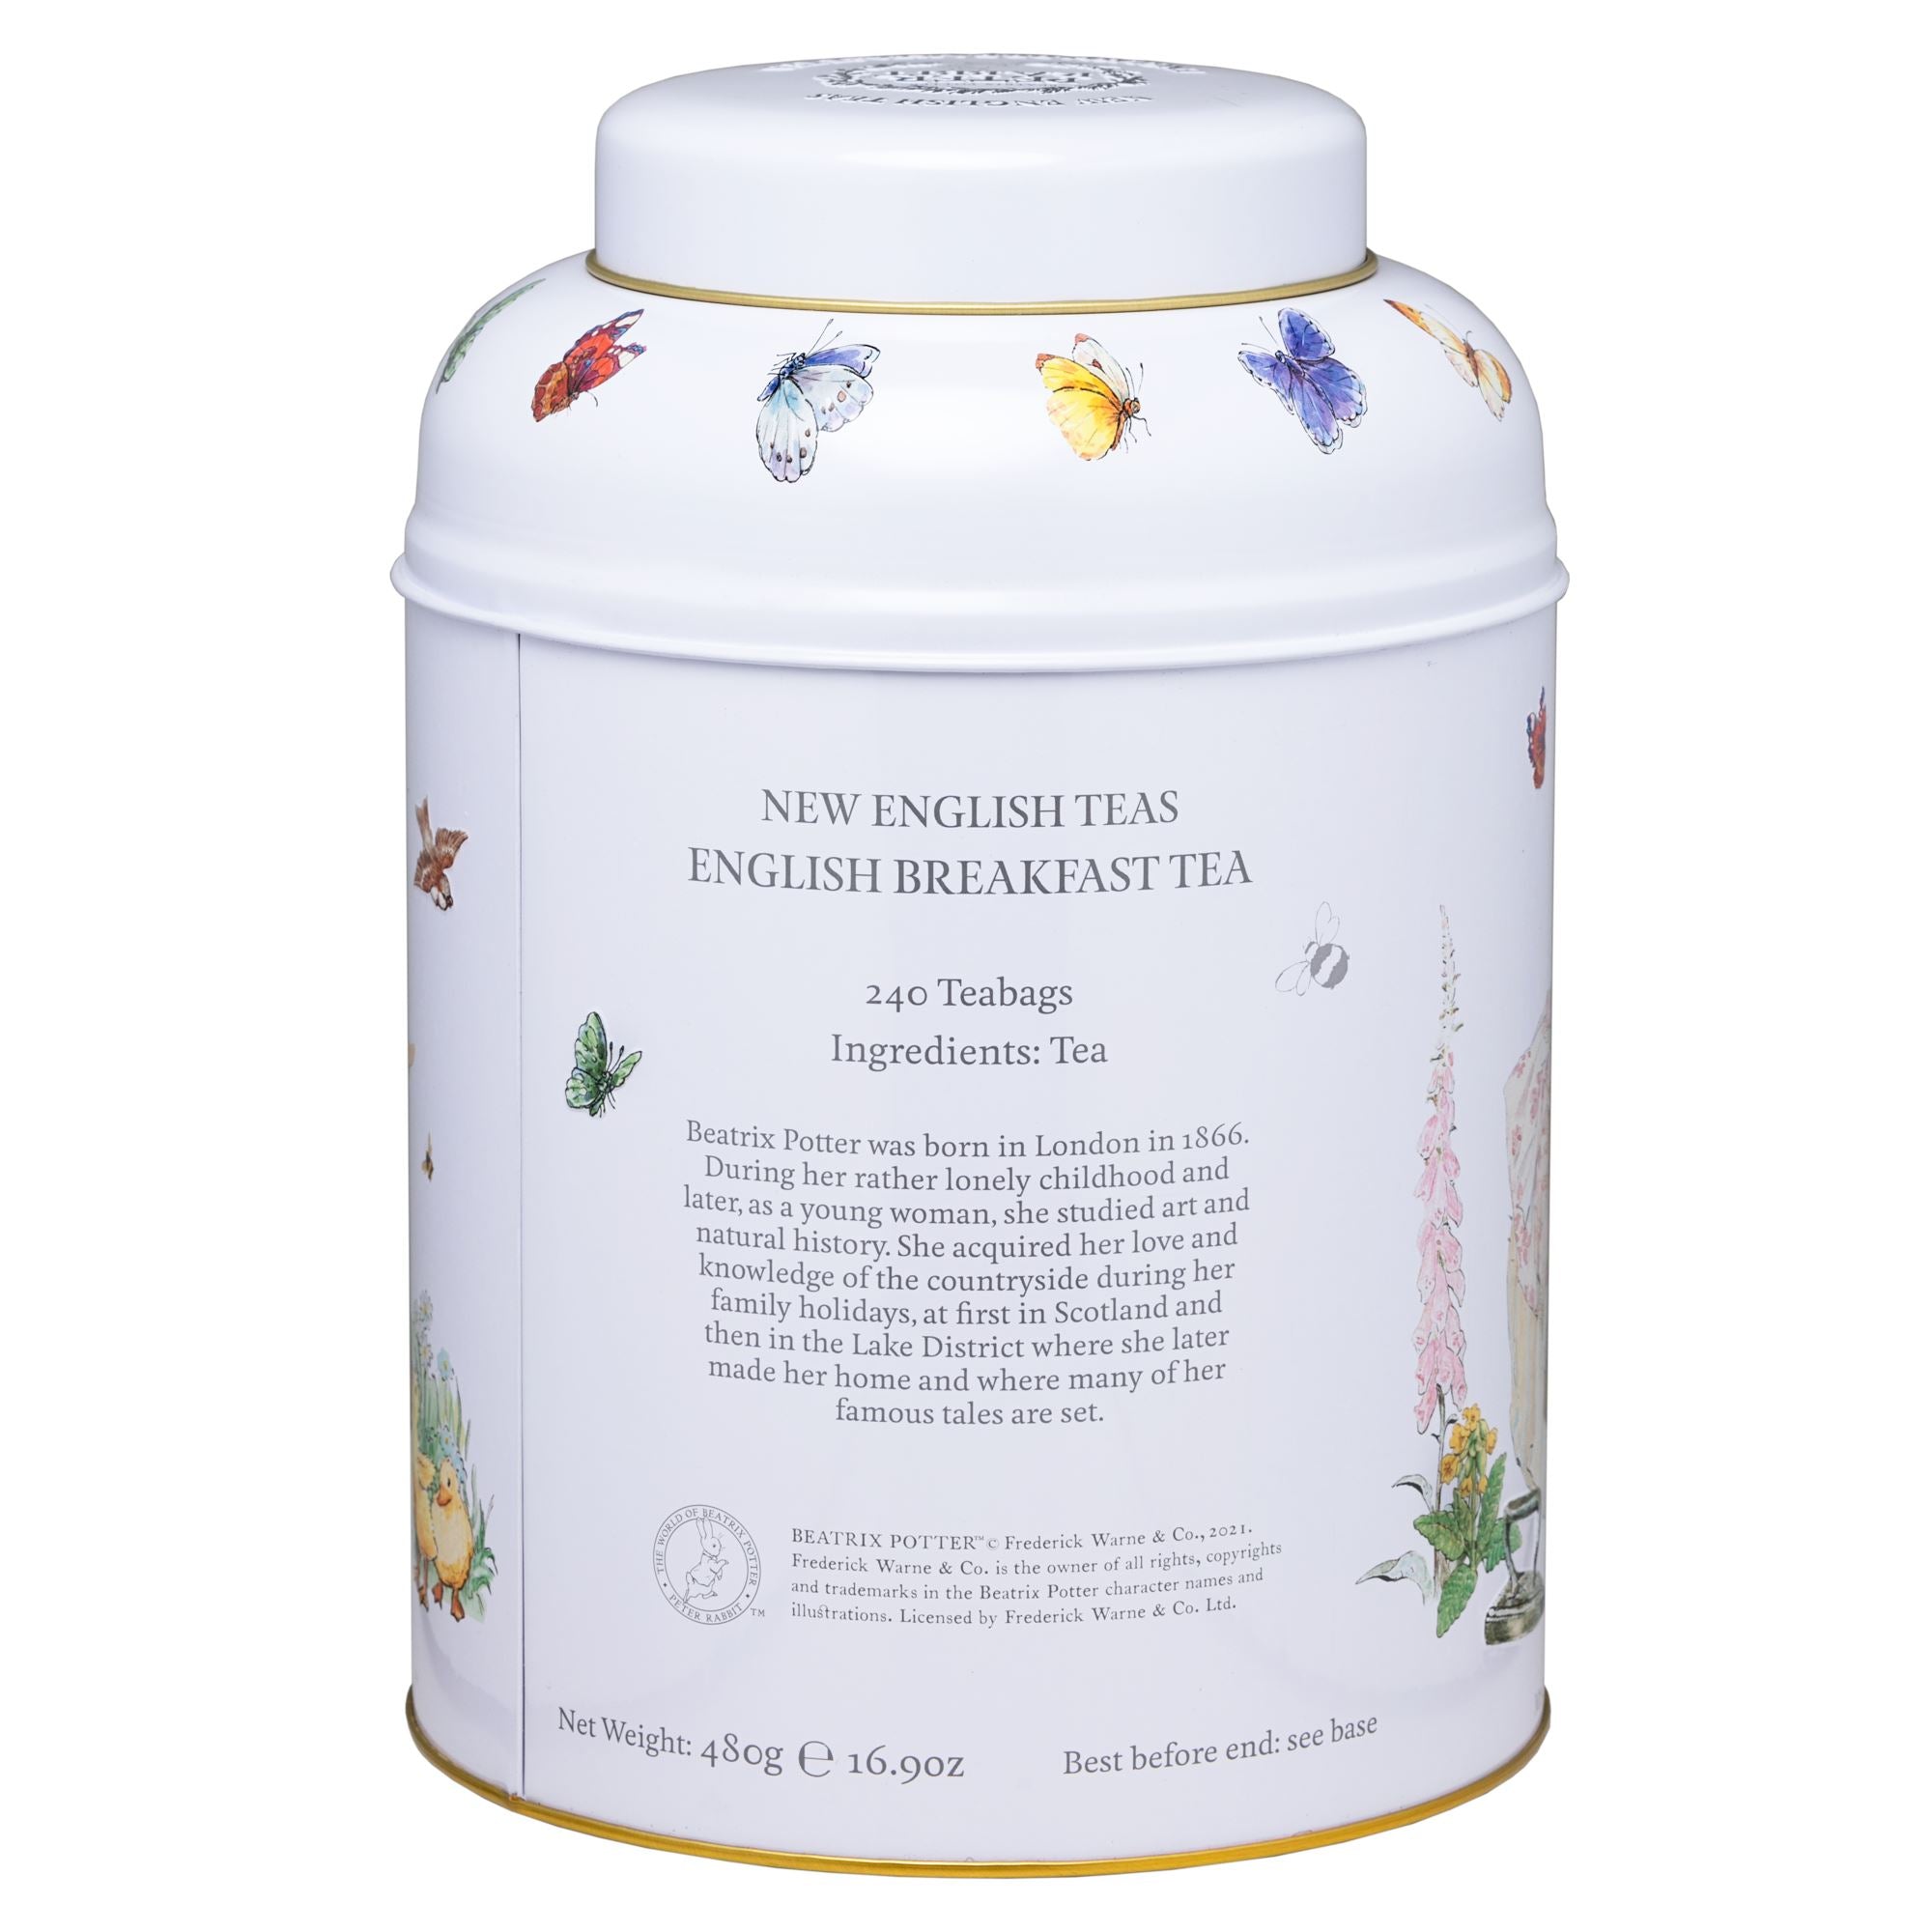 Beatrix Potter Tea Caddy with 240 English Breakfast Teabags Black Tea New English Teas 